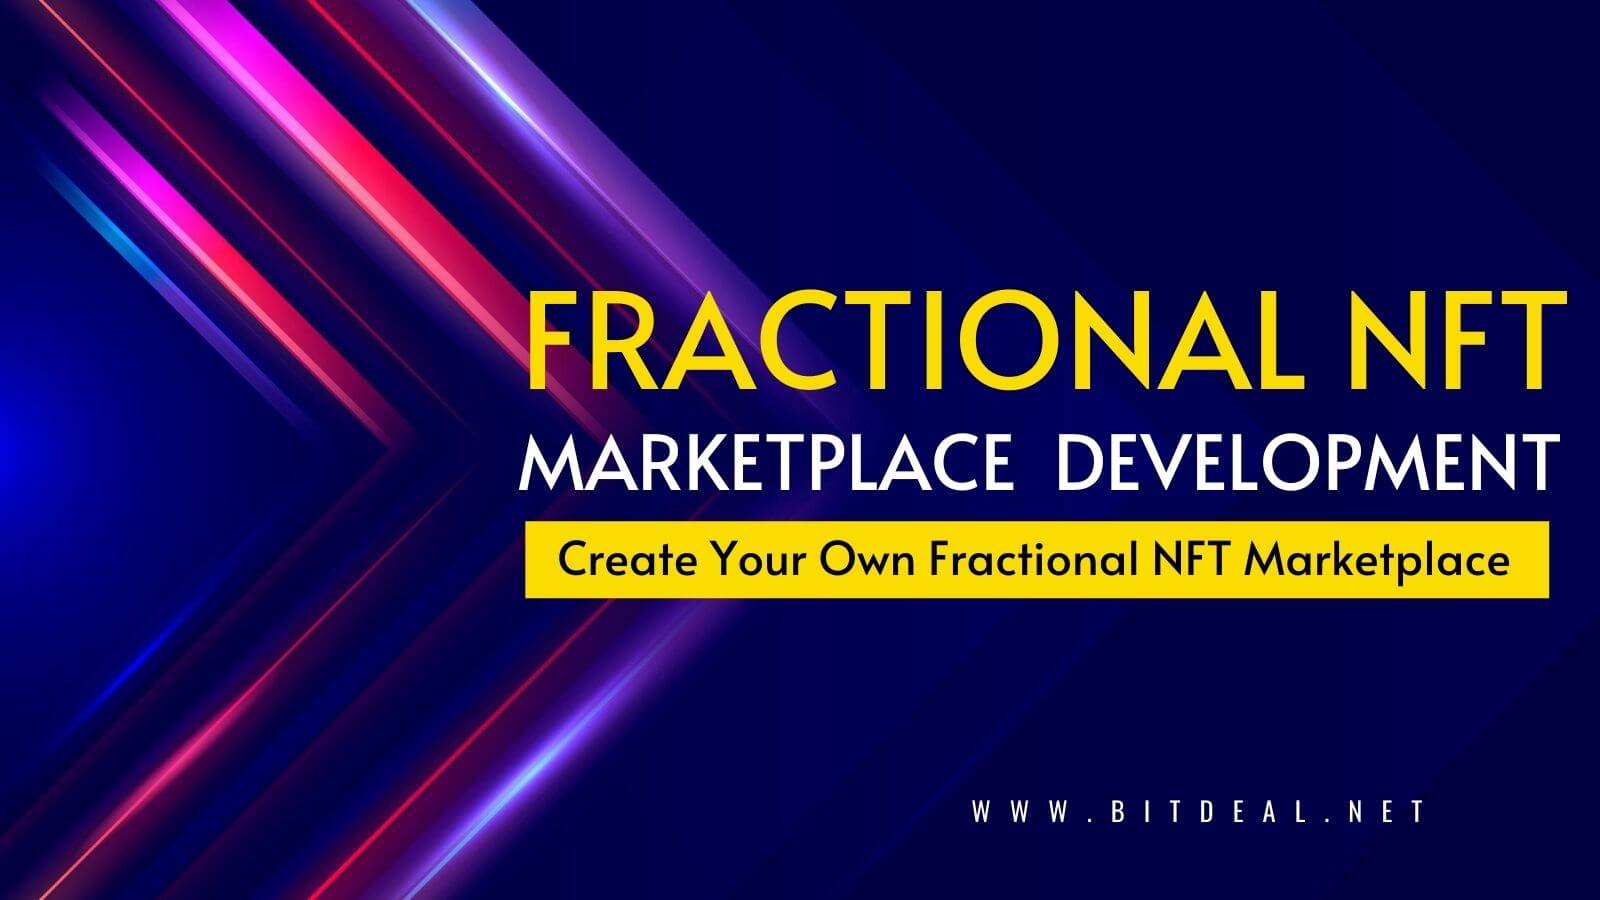 Fractional NFT Marketplace Development Company - Bitdeal